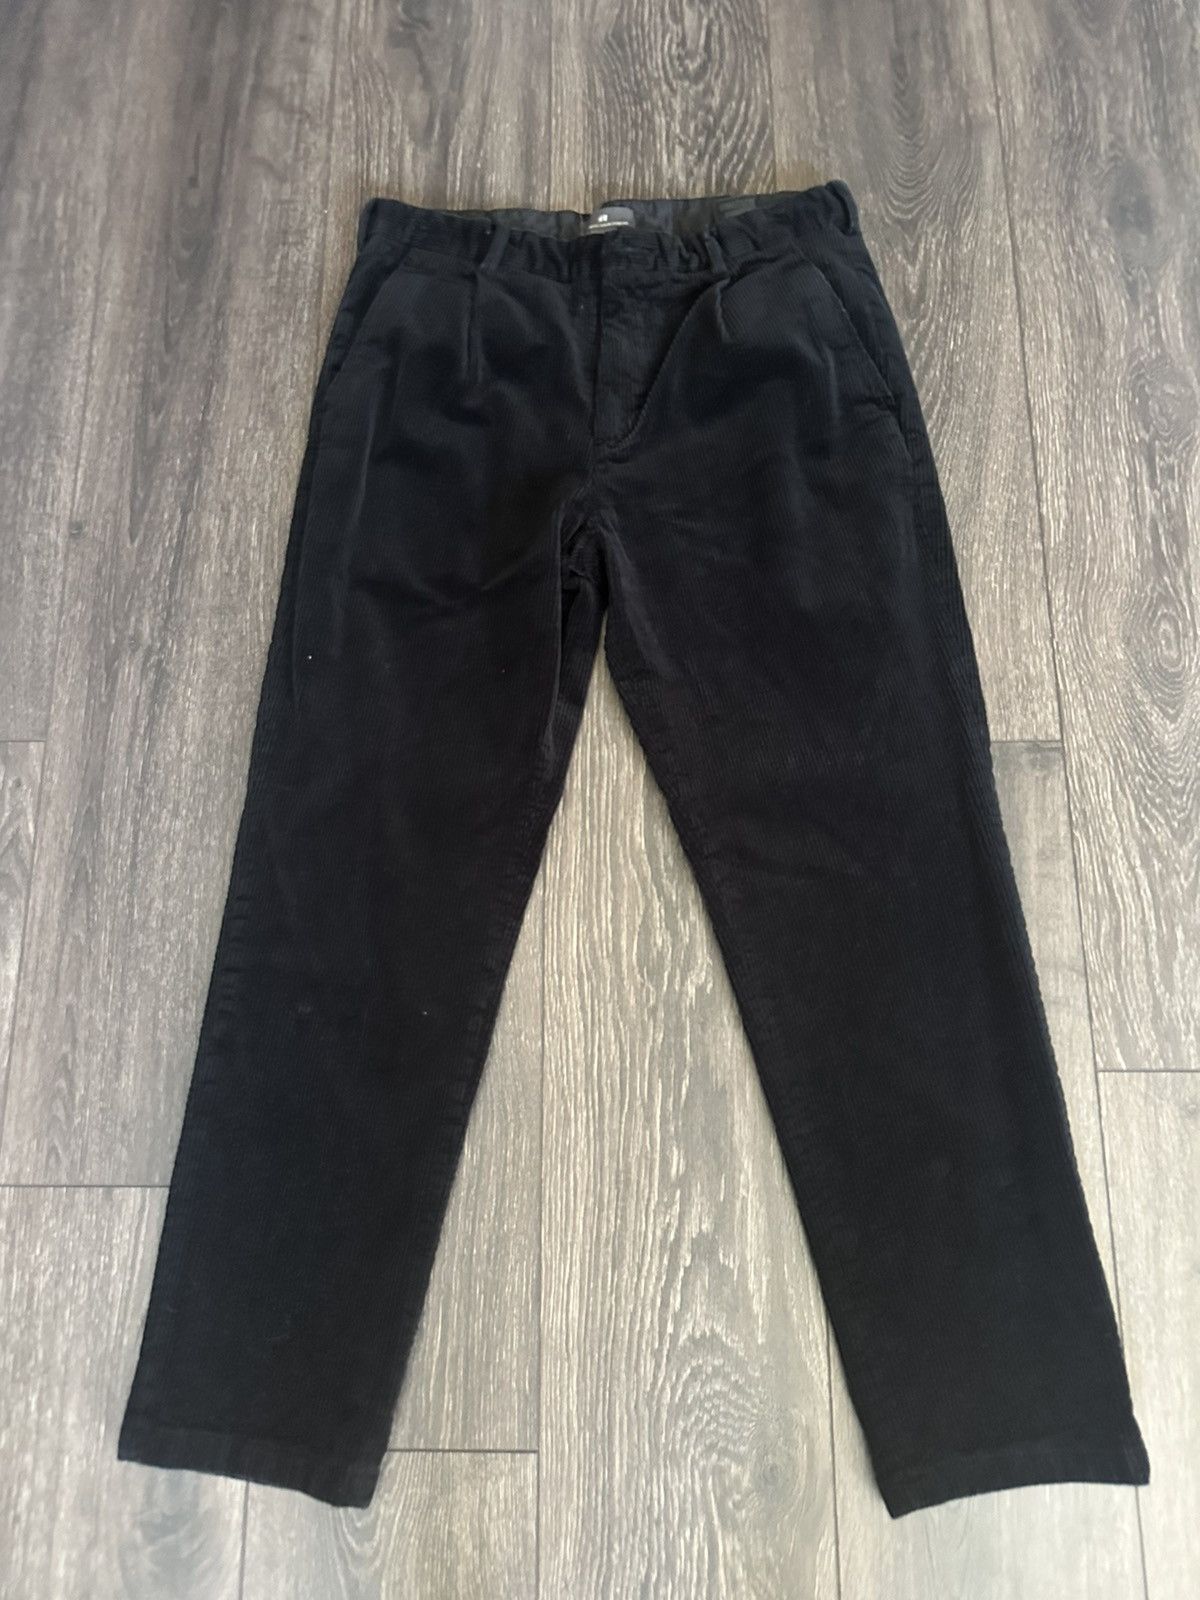 H&M Corduroy Black Pants | Grailed